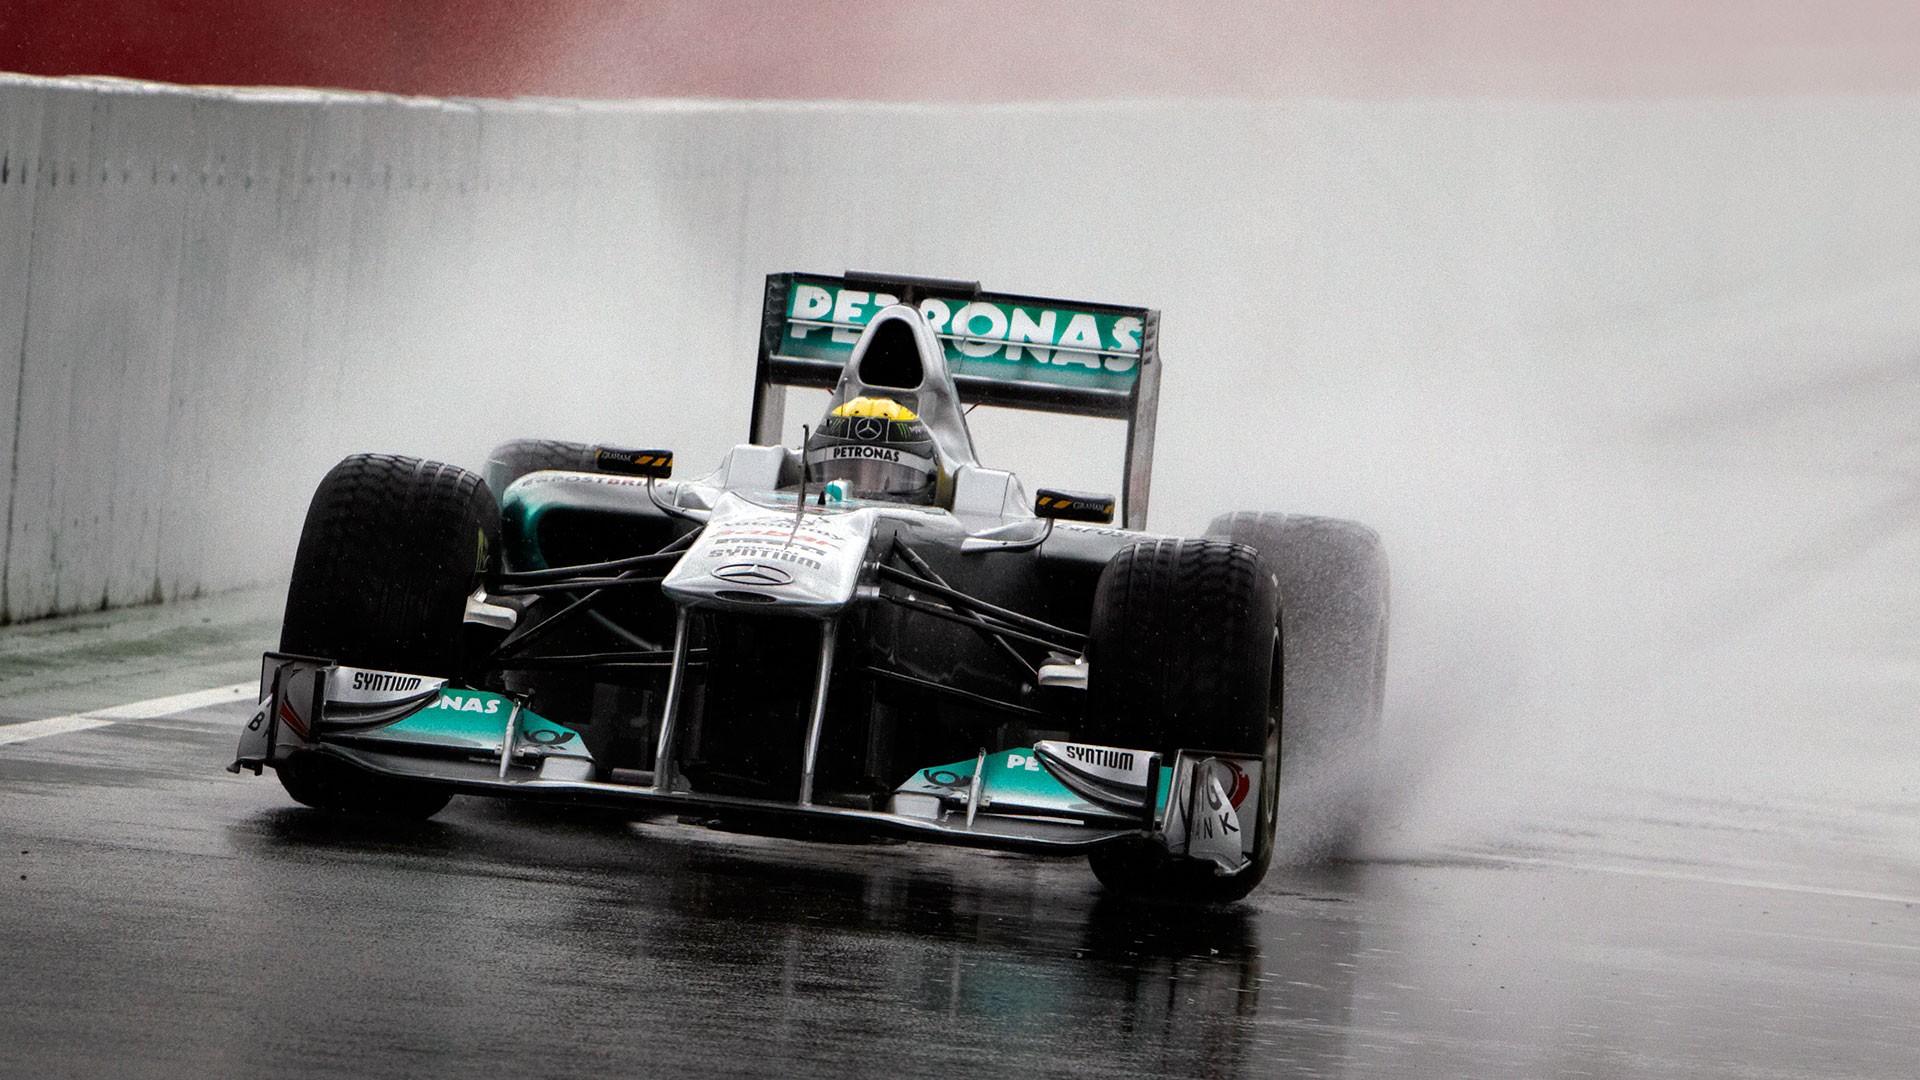 General 1920x1080 Mercedes AMG Petronas Formula 1 Lewis Hamilton vehicle rain sport race cars car racing wet asphalt motorsport